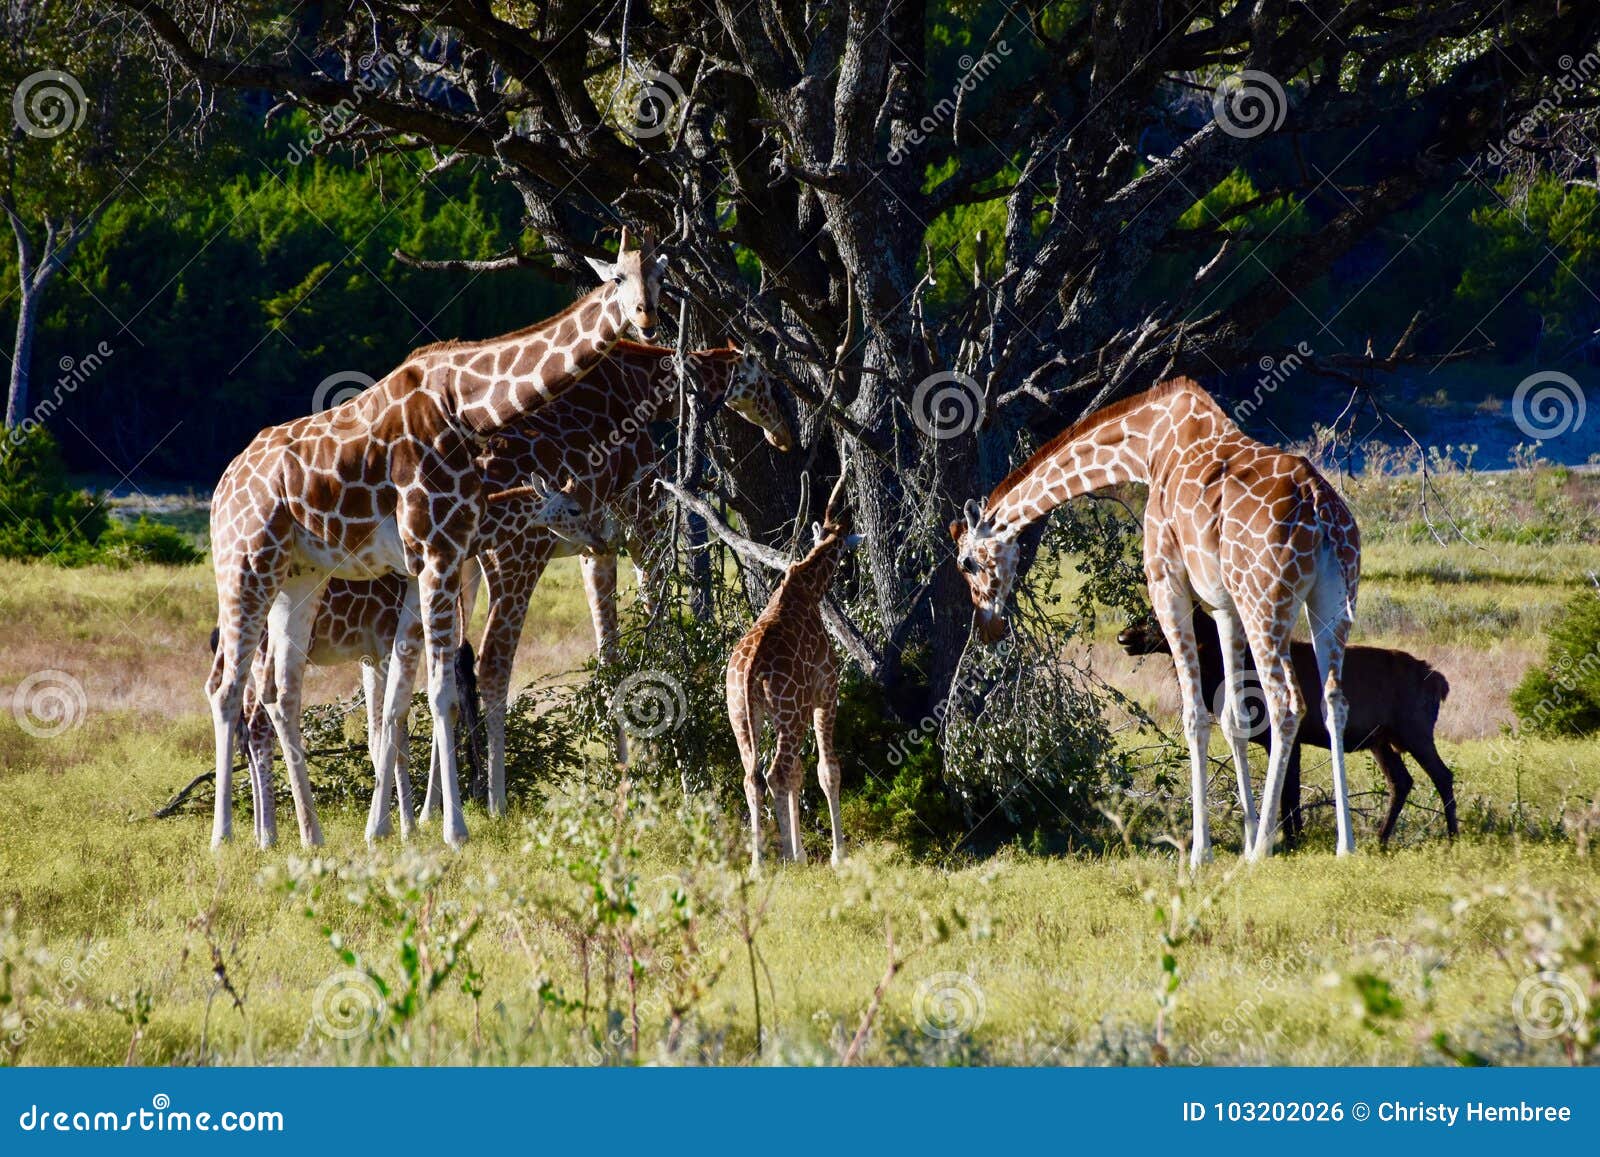 family unit: giraffa camelopardalis, fossil rim wildlife center